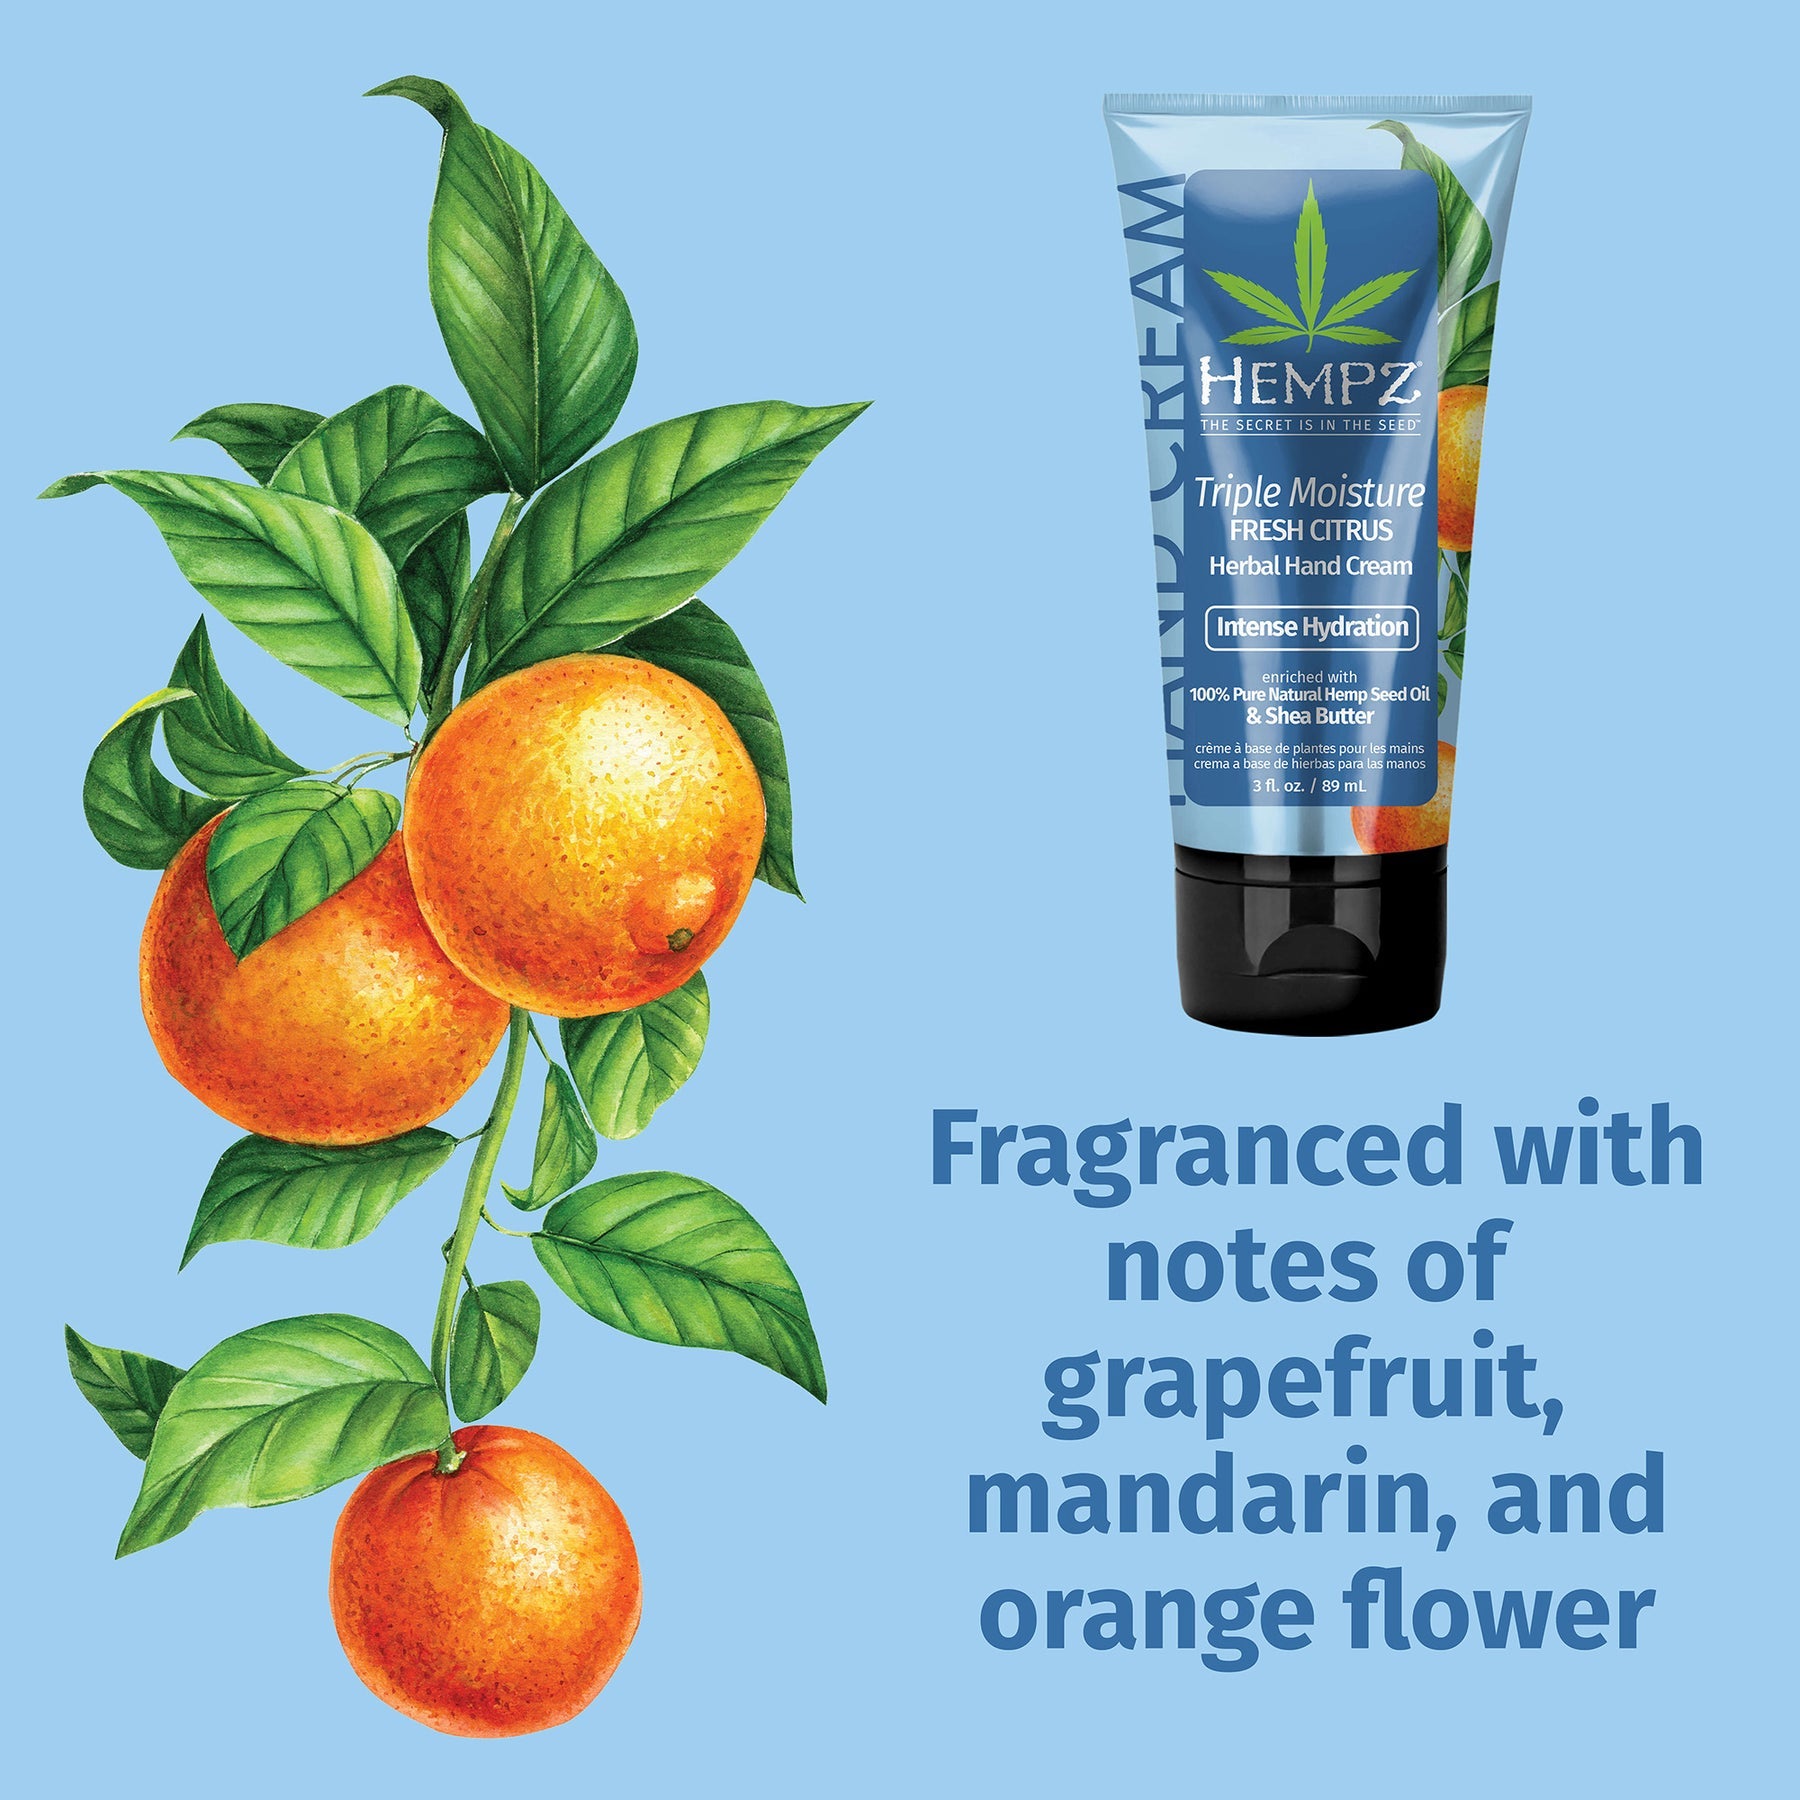 Hempz - Triple Moisture Fresh Citrus Herbal Hand Cream - Creata Beauty - Professional Beauty Products